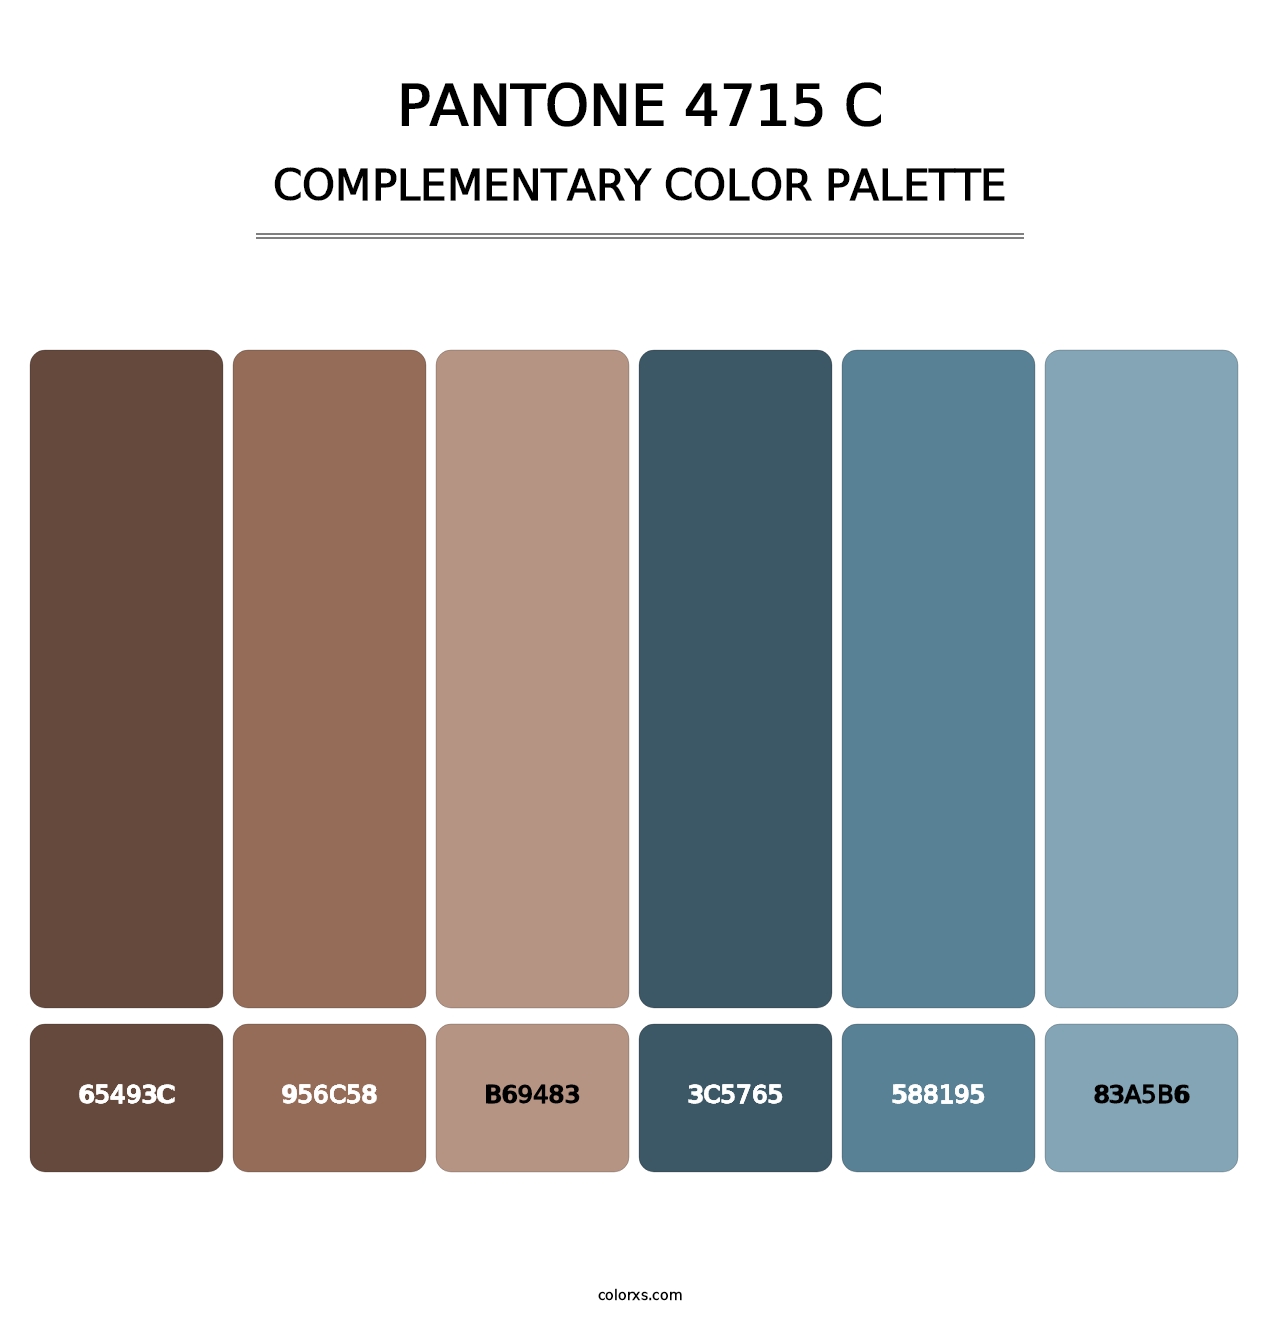 PANTONE 4715 C - Complementary Color Palette